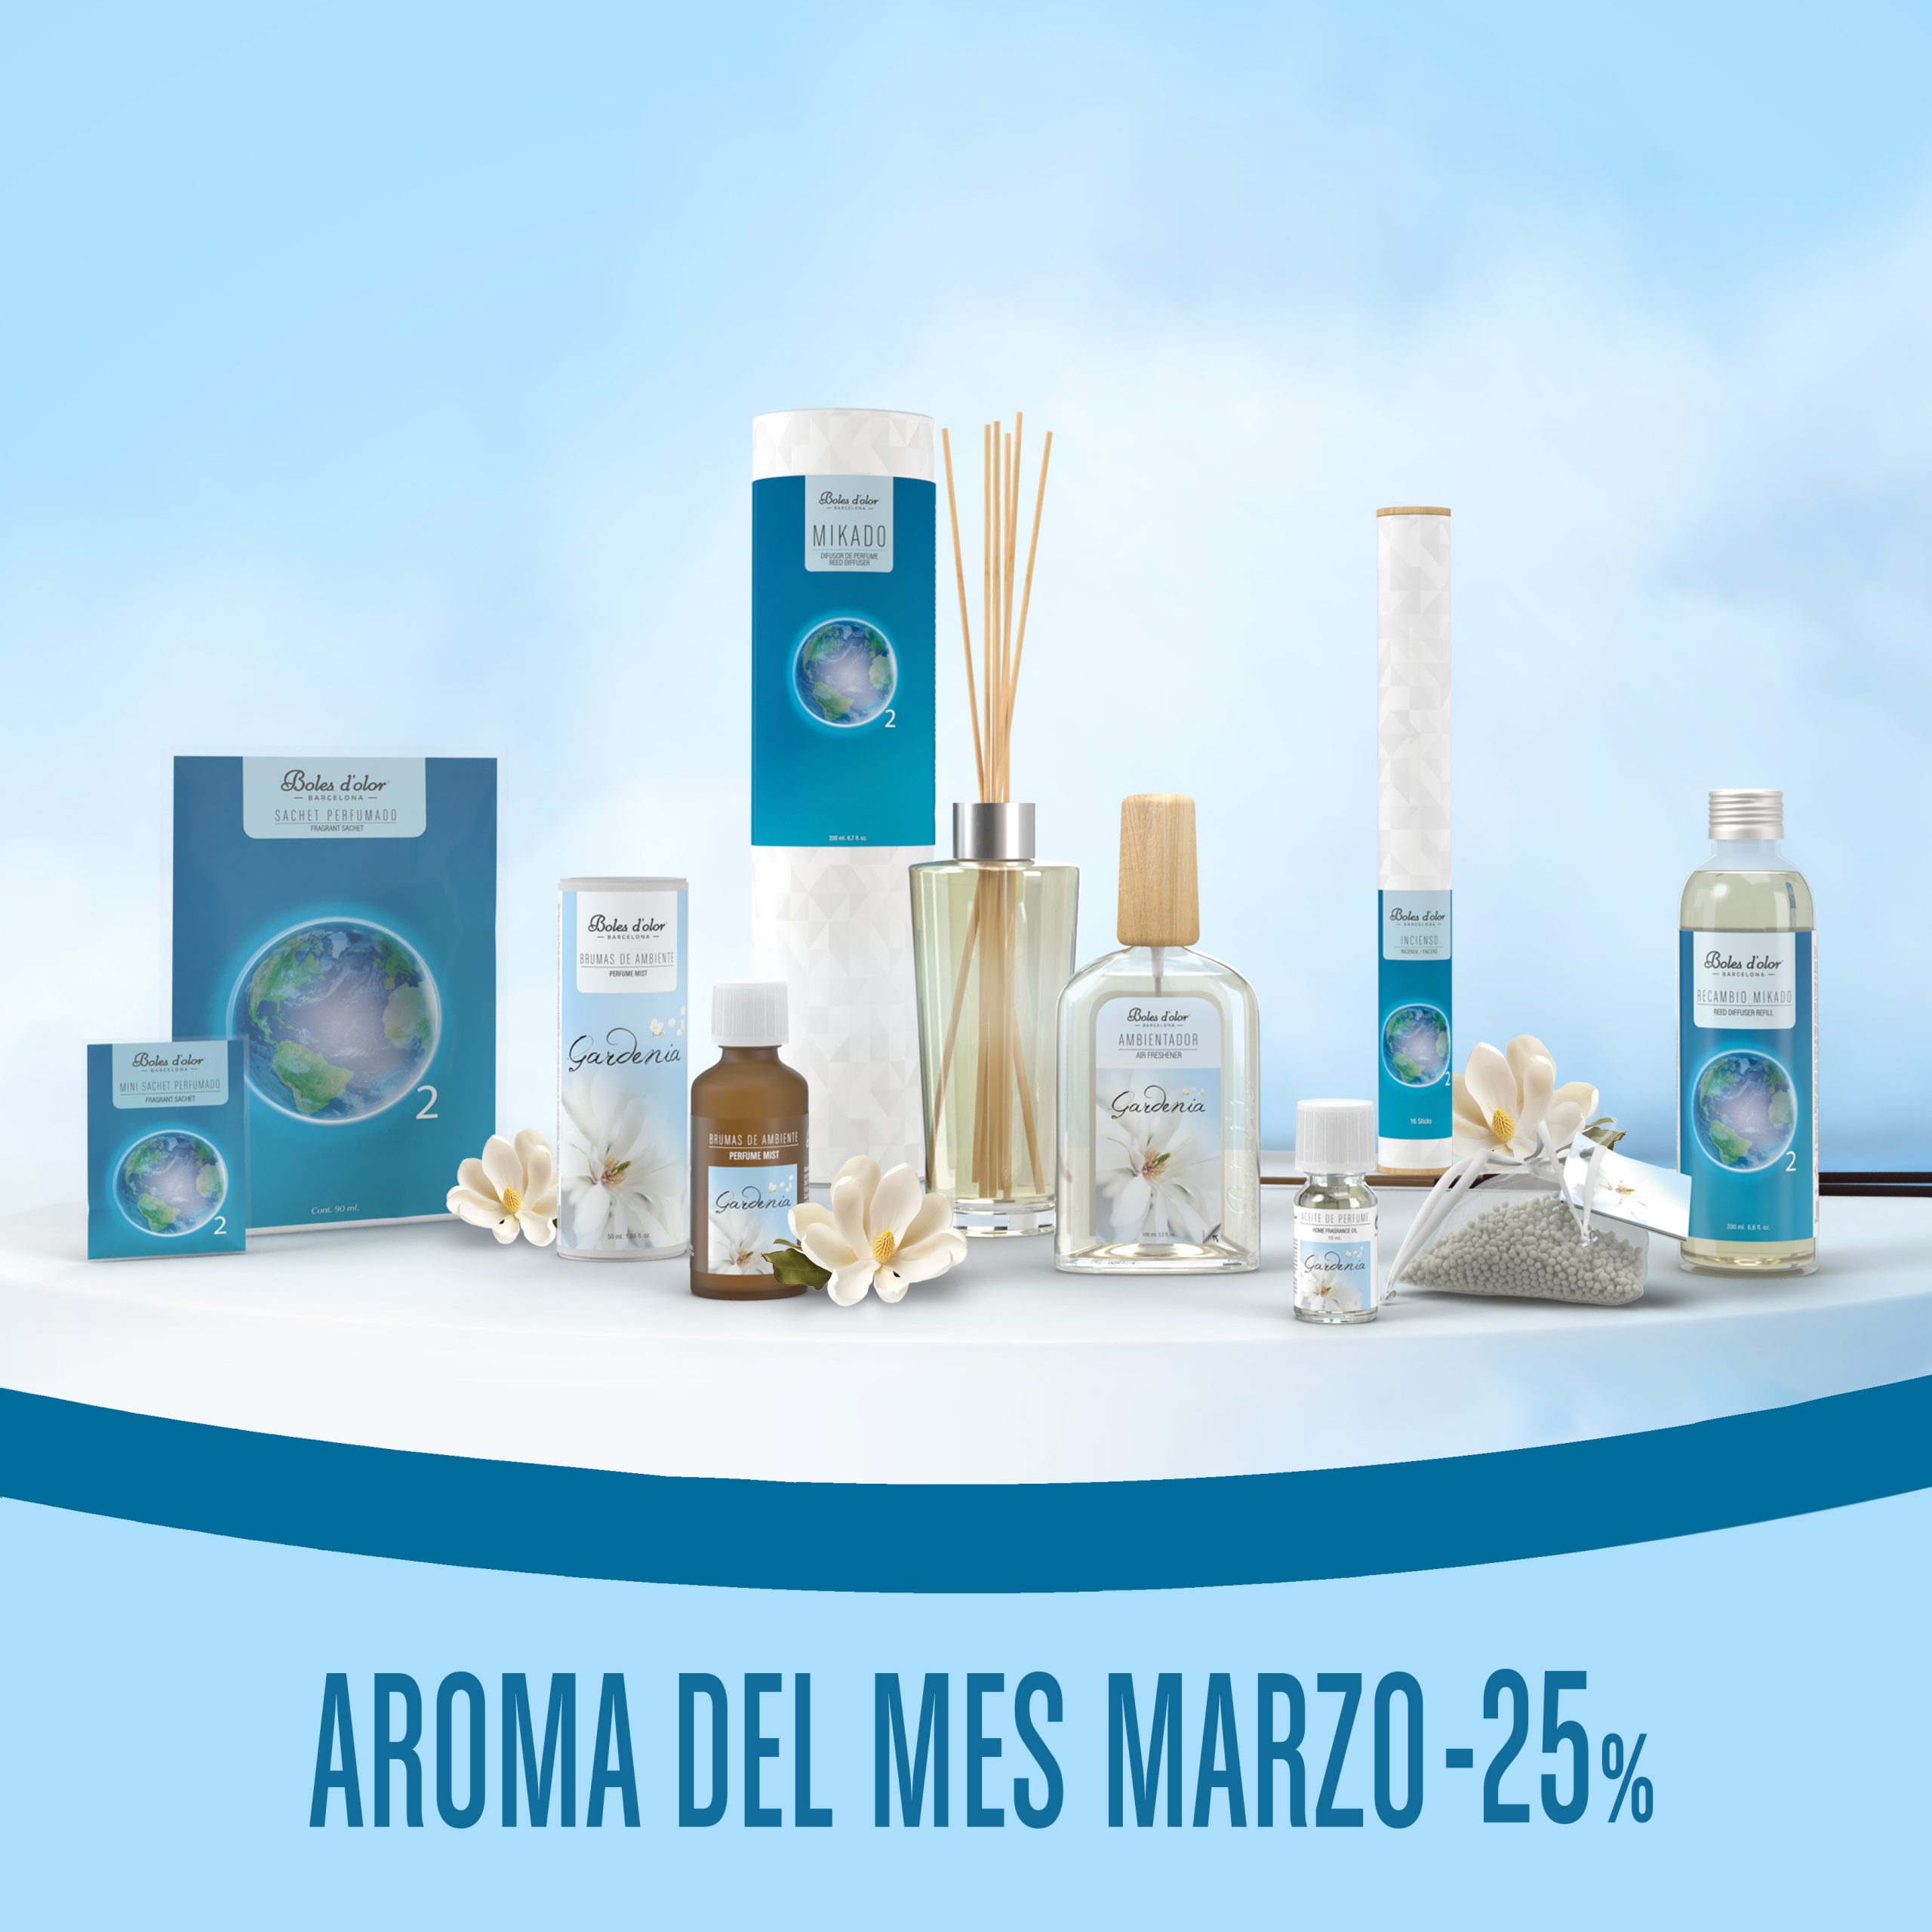 Compra Online Aceite de Perfume Concentrado de la marca Boles d'Olor de  aroma a cashmere — WonderfulHome Shop